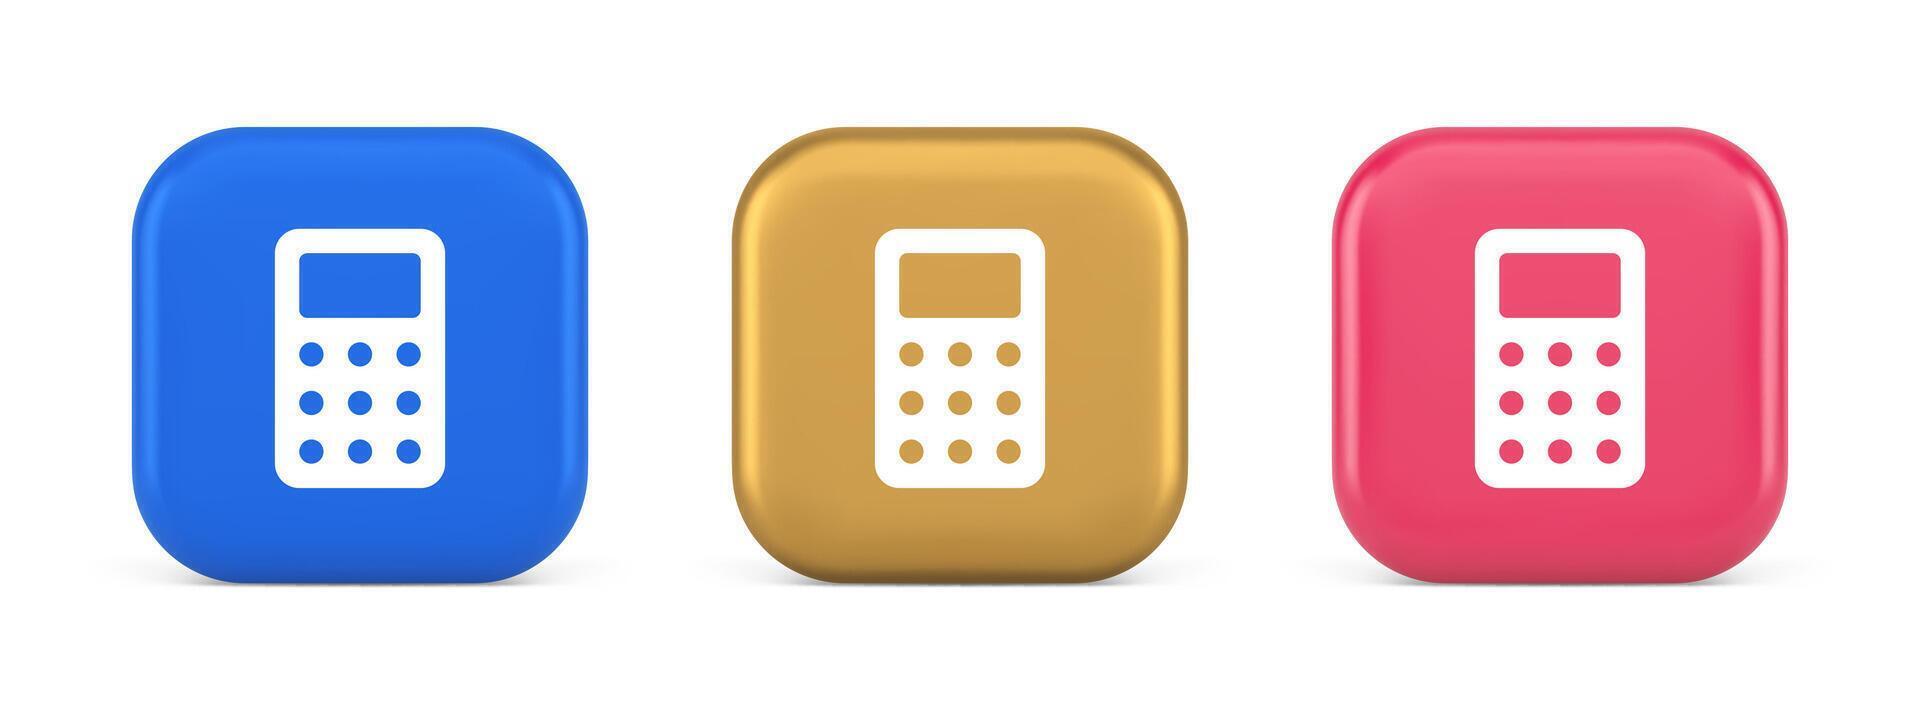 calculadora botón matemático número contando web solicitud diseño 3d realista icono vector